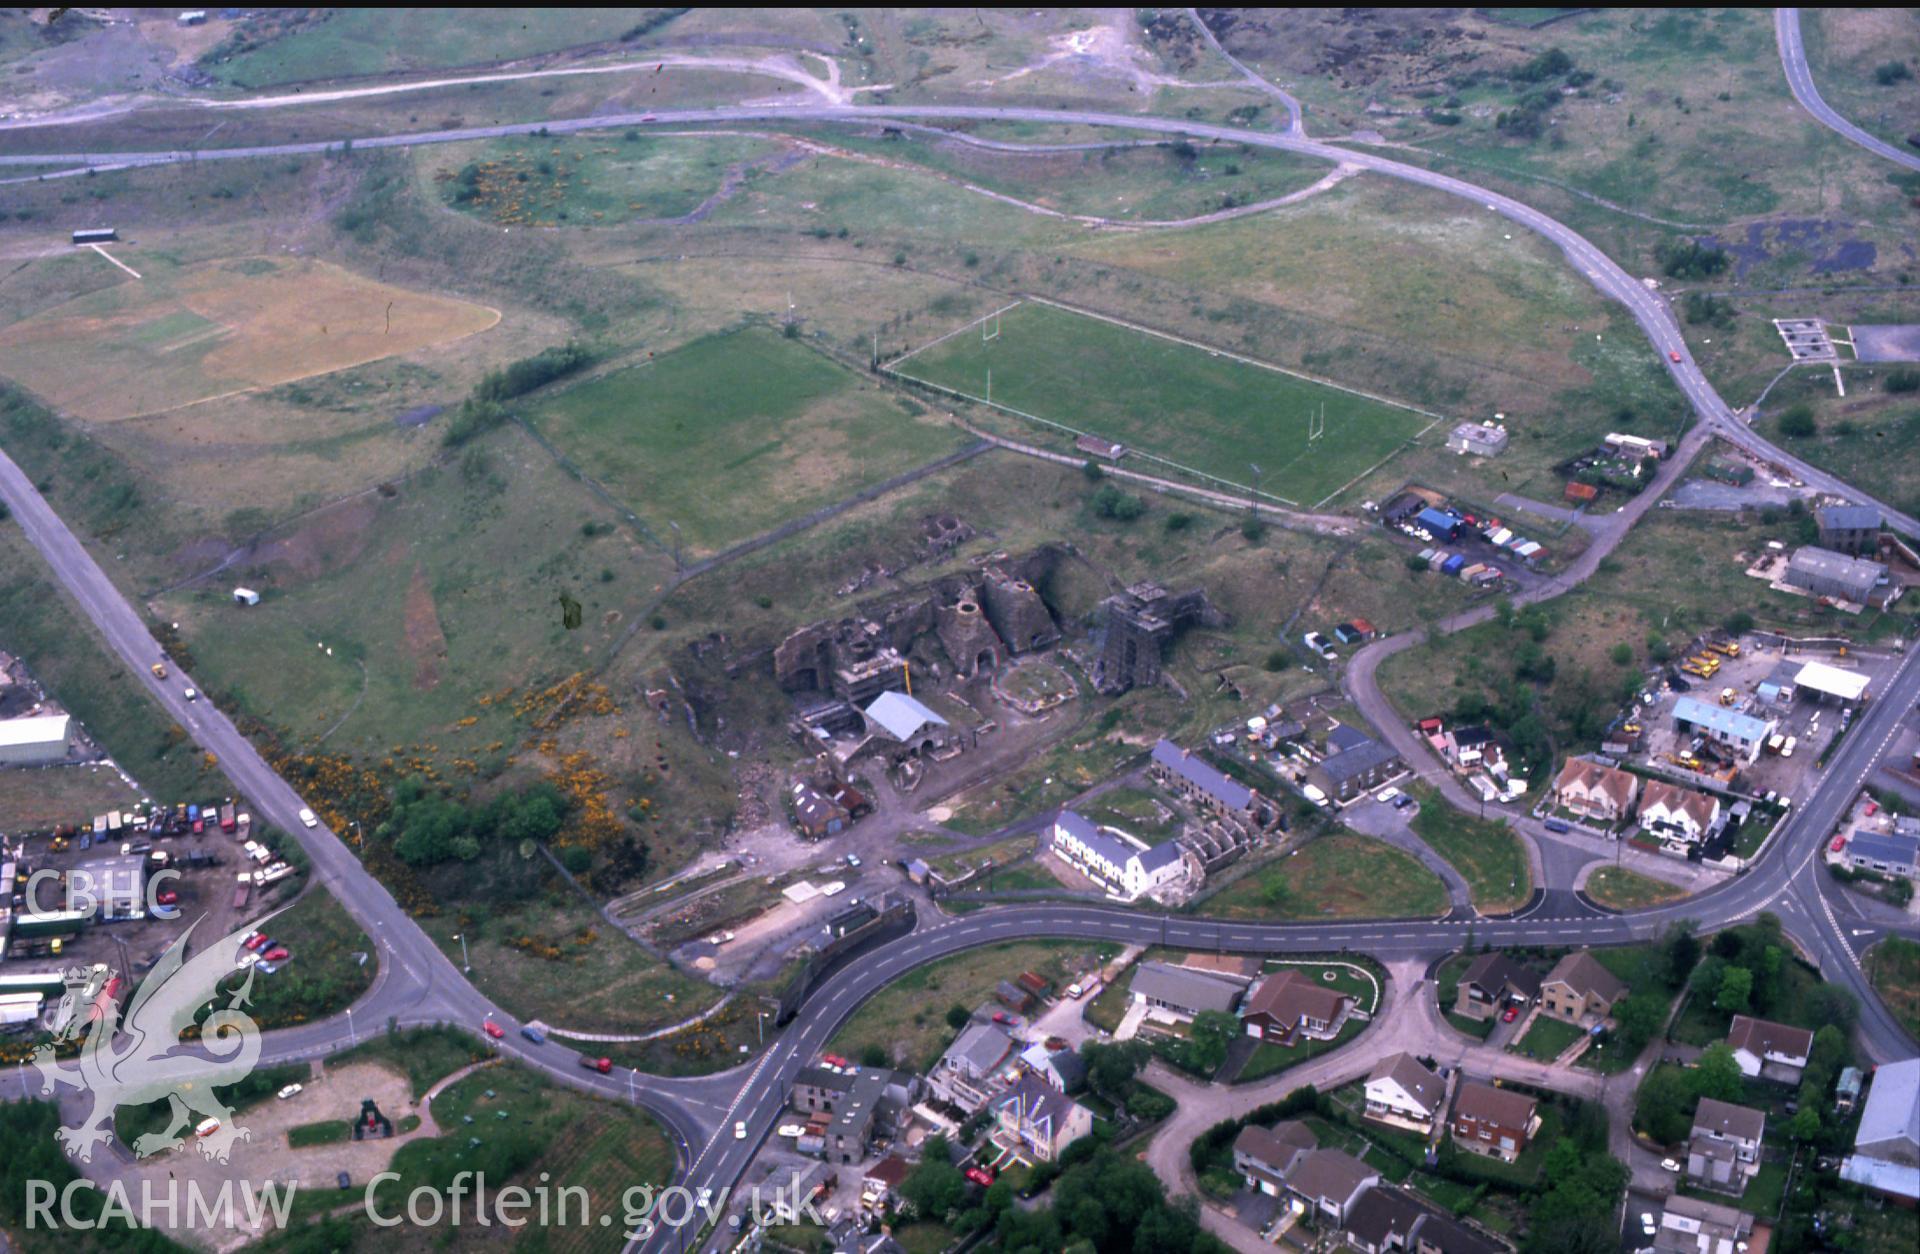 Slide of RCAHMW colour oblique aerial photograph of Blaenavon Ironworks, Blaenavon, taken by C.R. Musson, 11/5/1990.